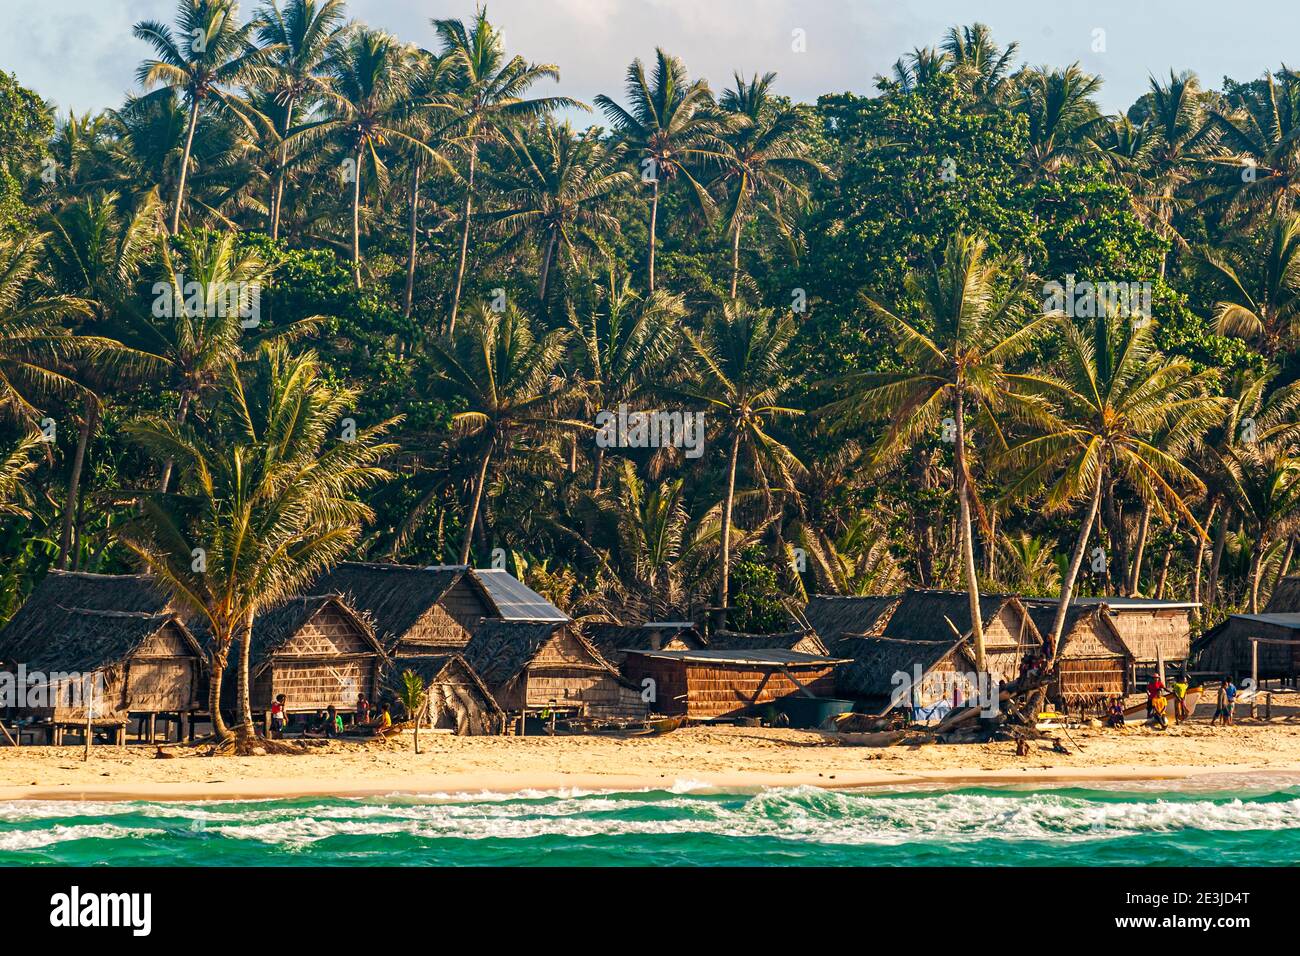 Village on the island beach in Papua New Guinea Stock Photo